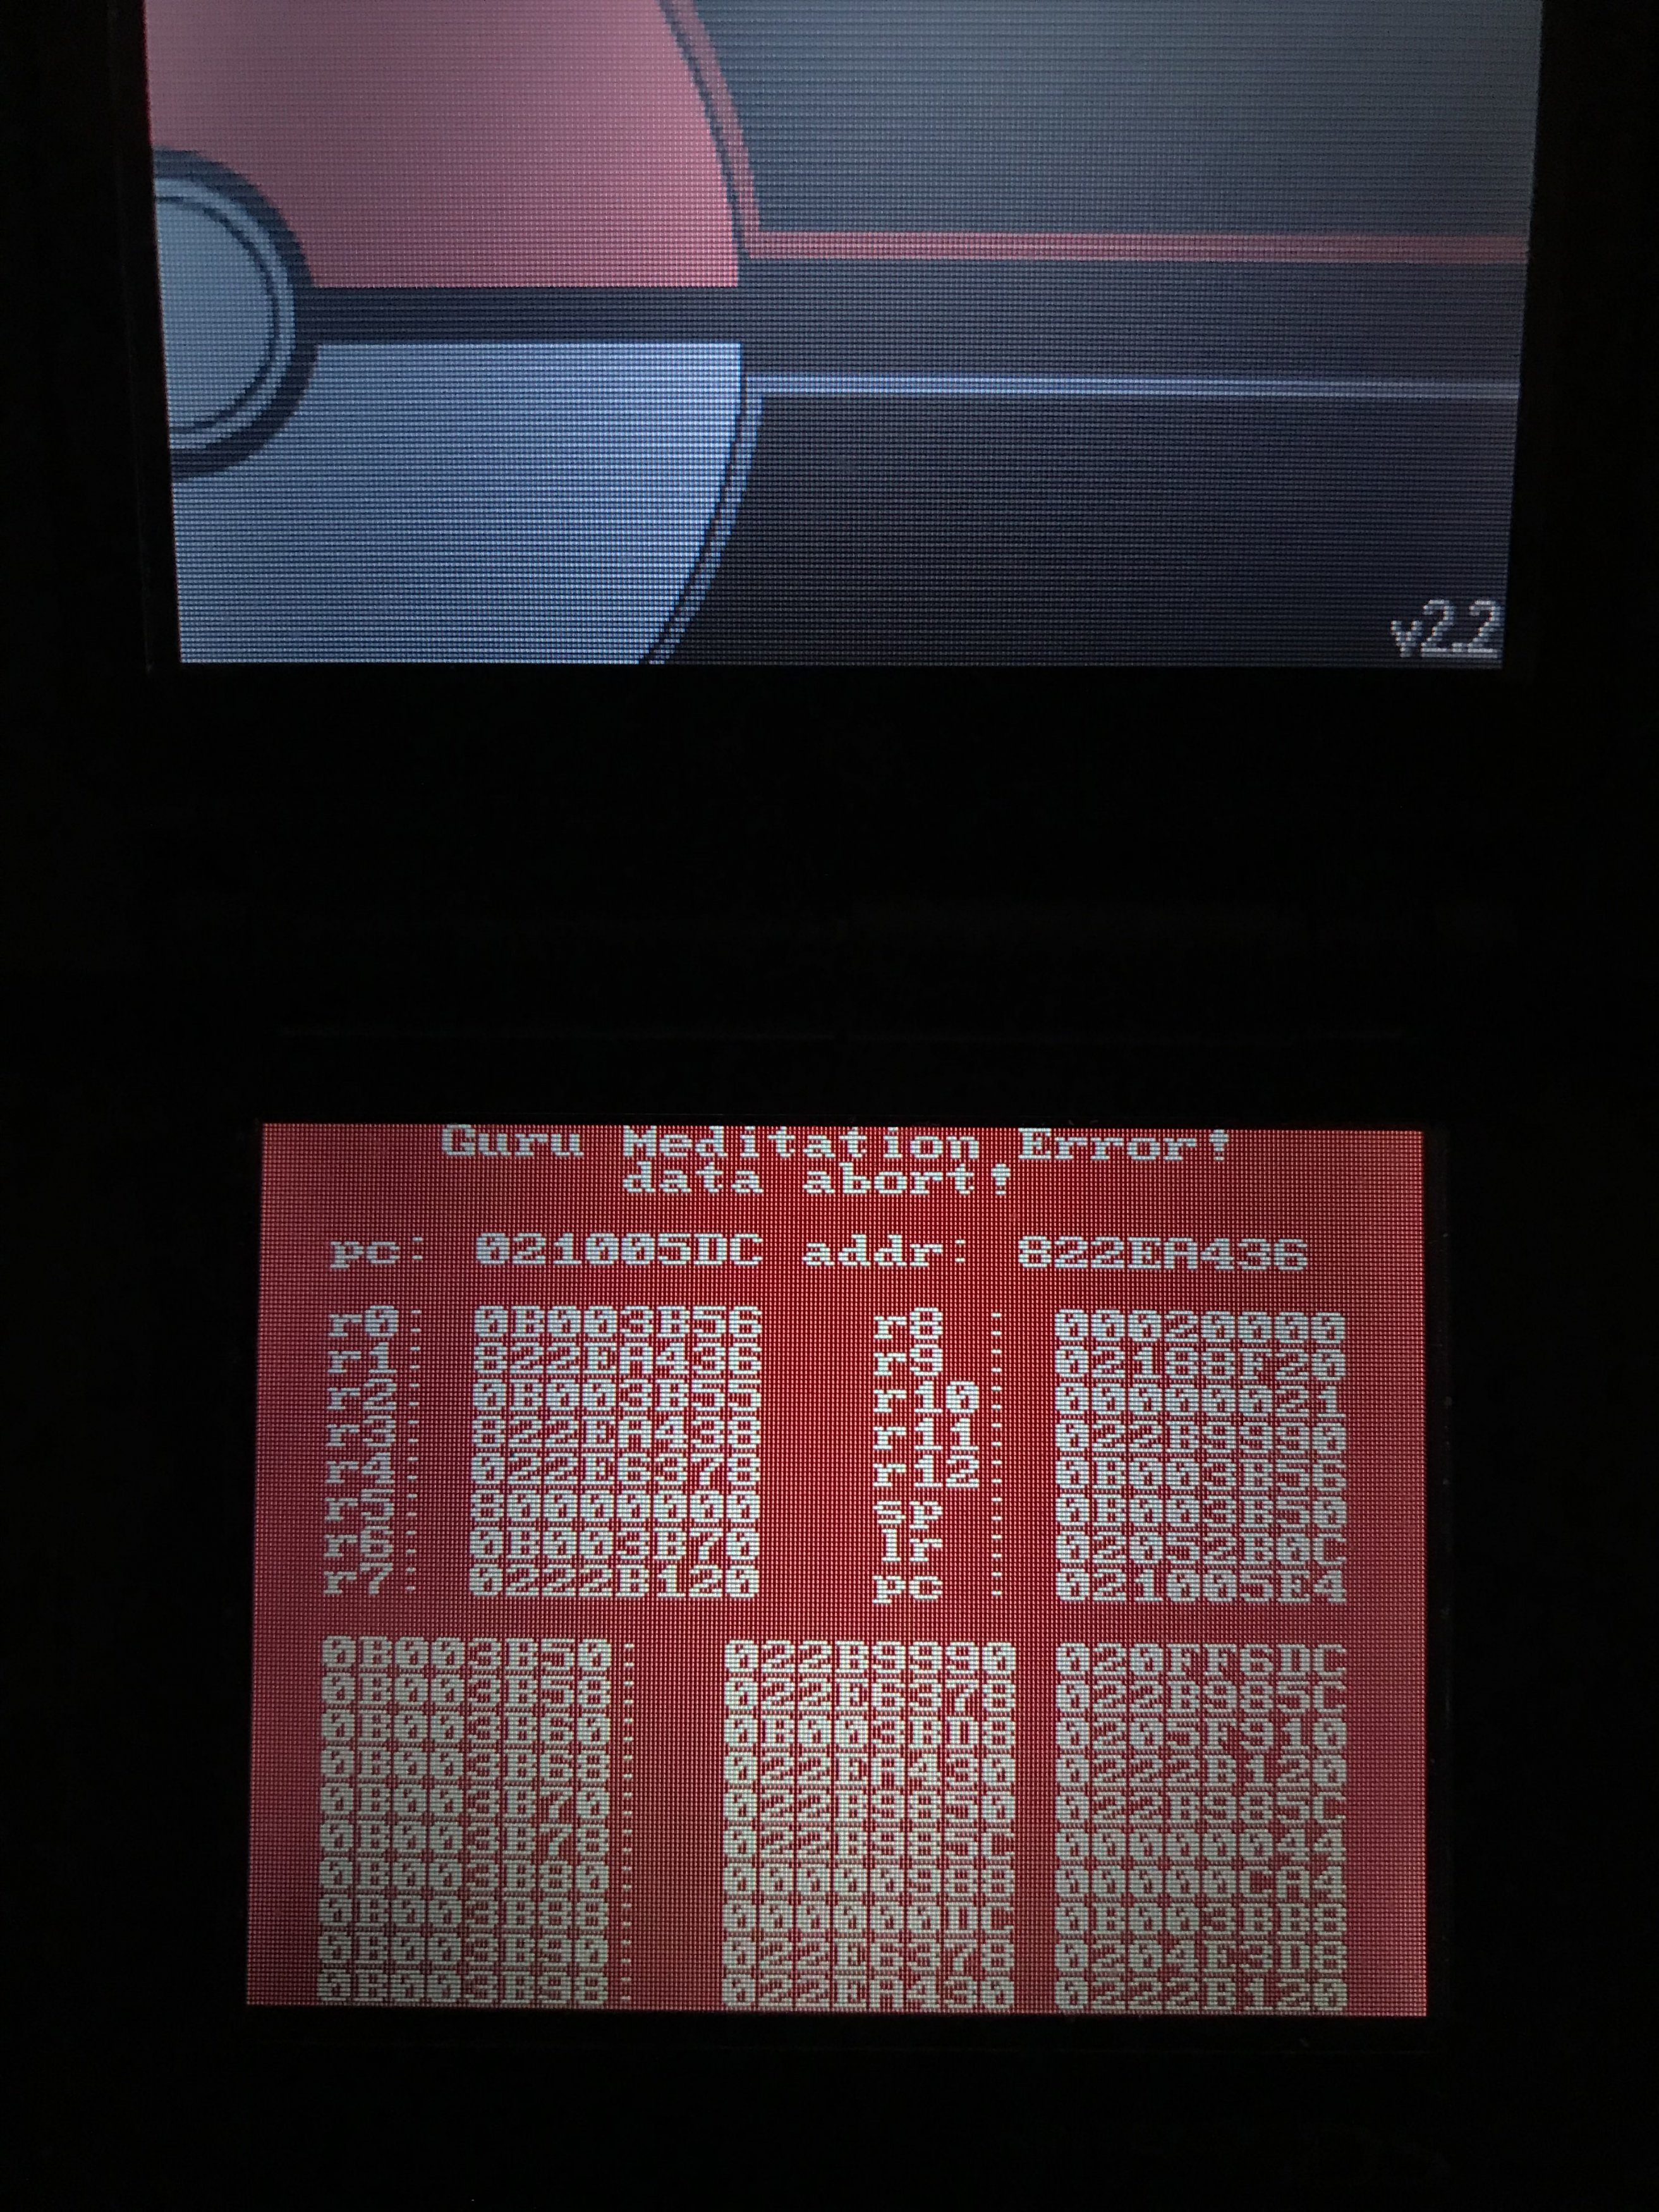 Pokemon Generation IV 4 Nintendo DS Reproduction -  Portugal